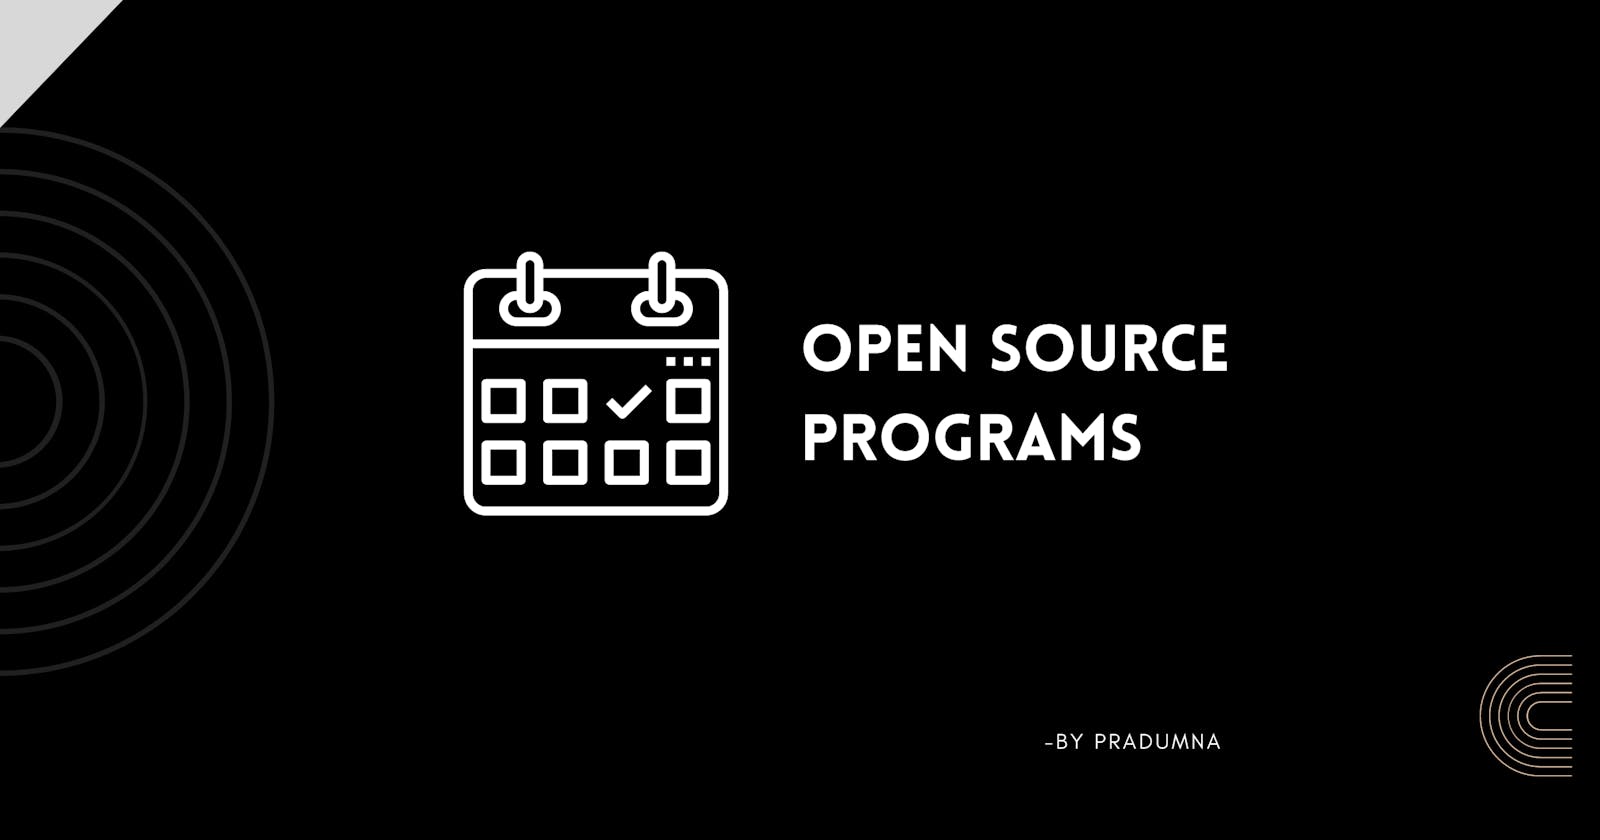 Open Source programs